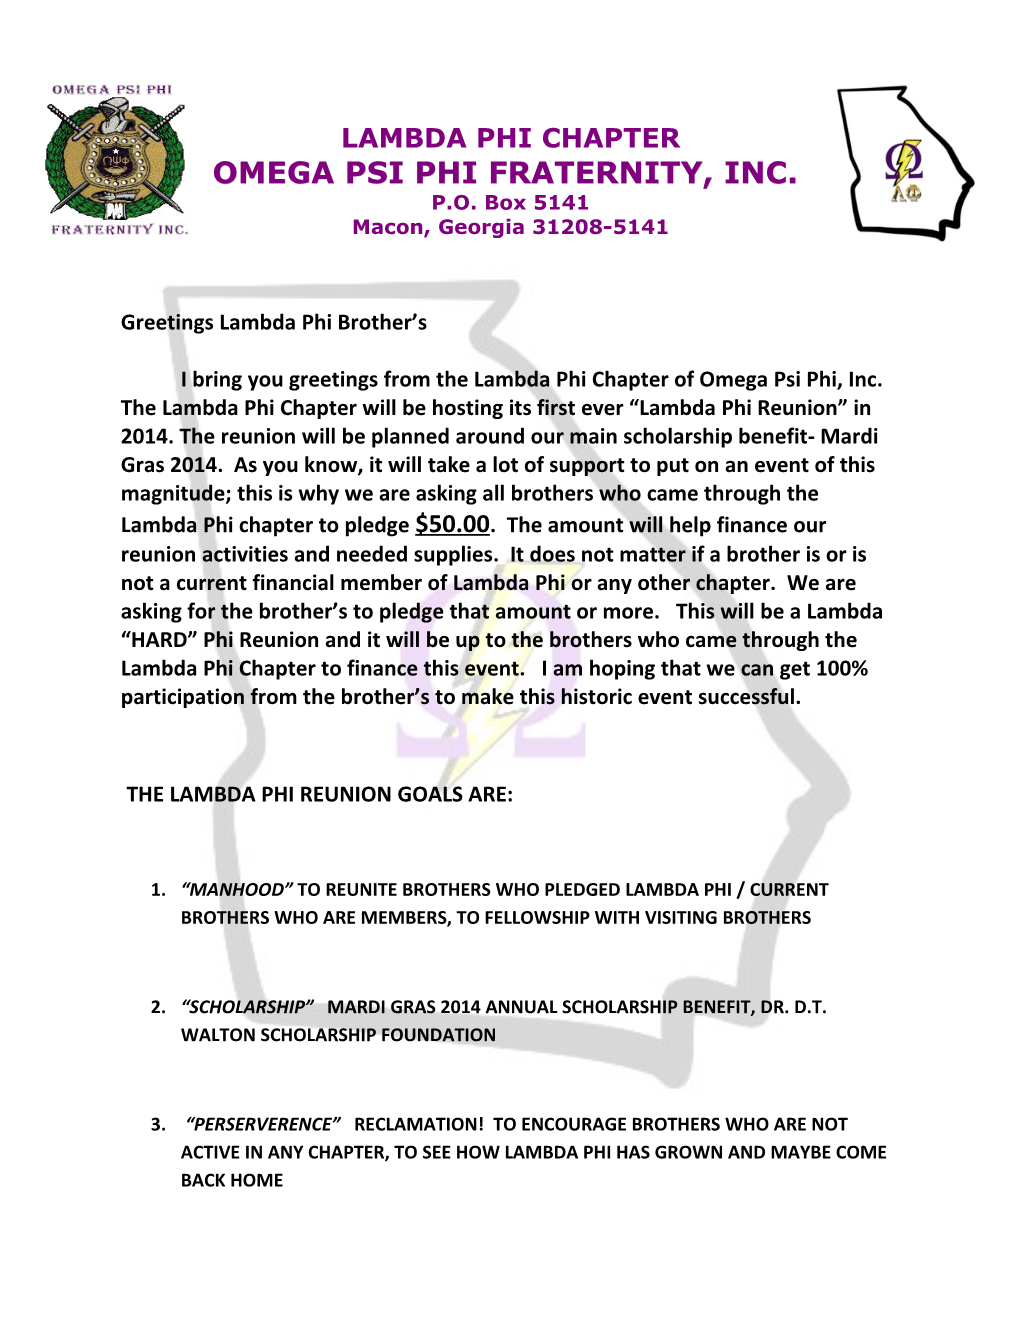 The Lambda Phi Chapter of Omega Psi Phi Fraternity, Inc